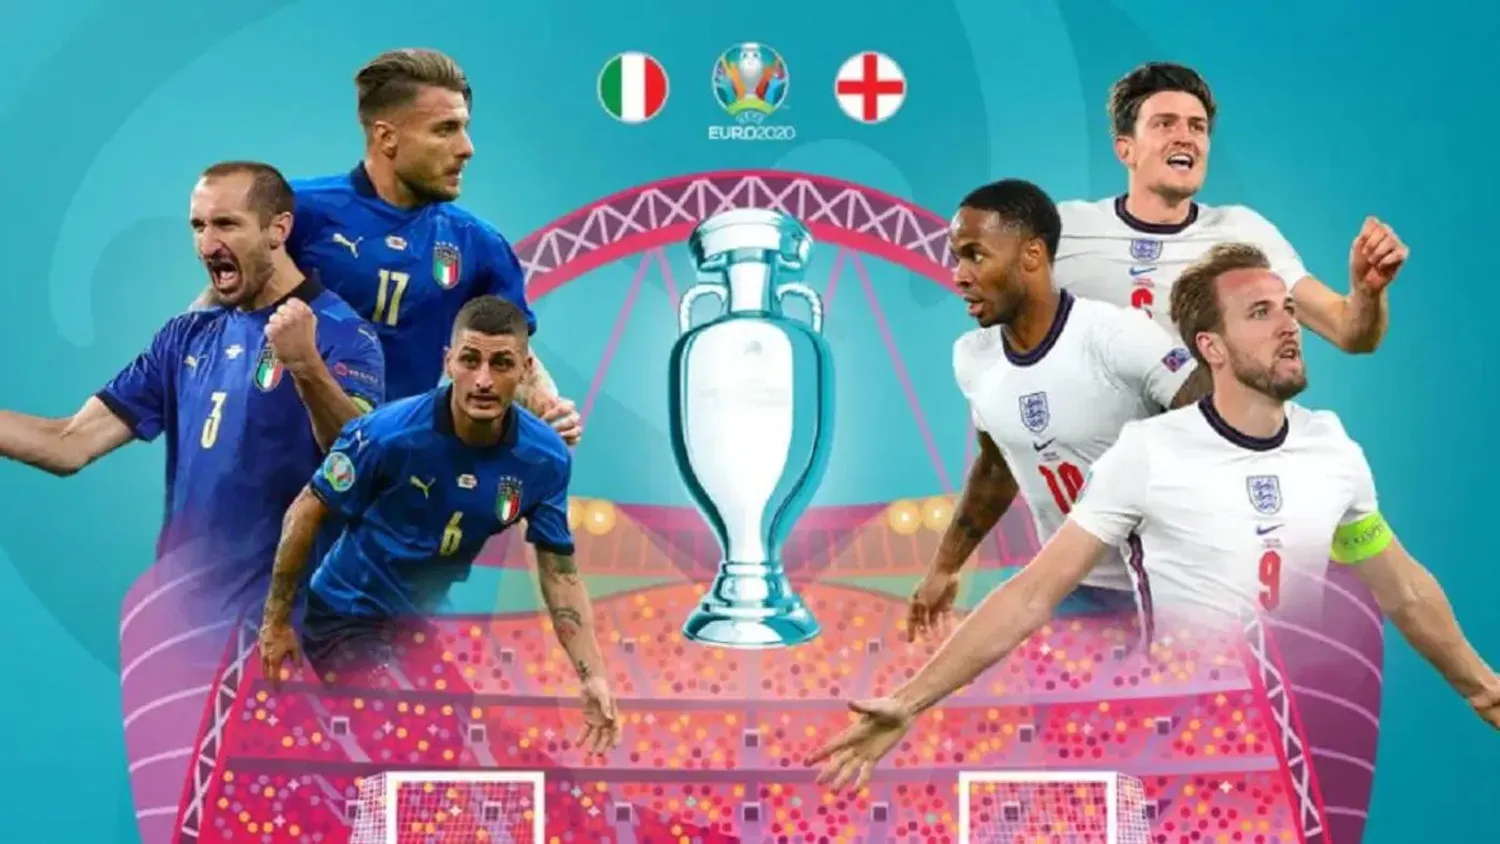 [ SPORT ] Football/Euro2021: Finale ce dimanche 11 juillet avec Italie-Angleterre